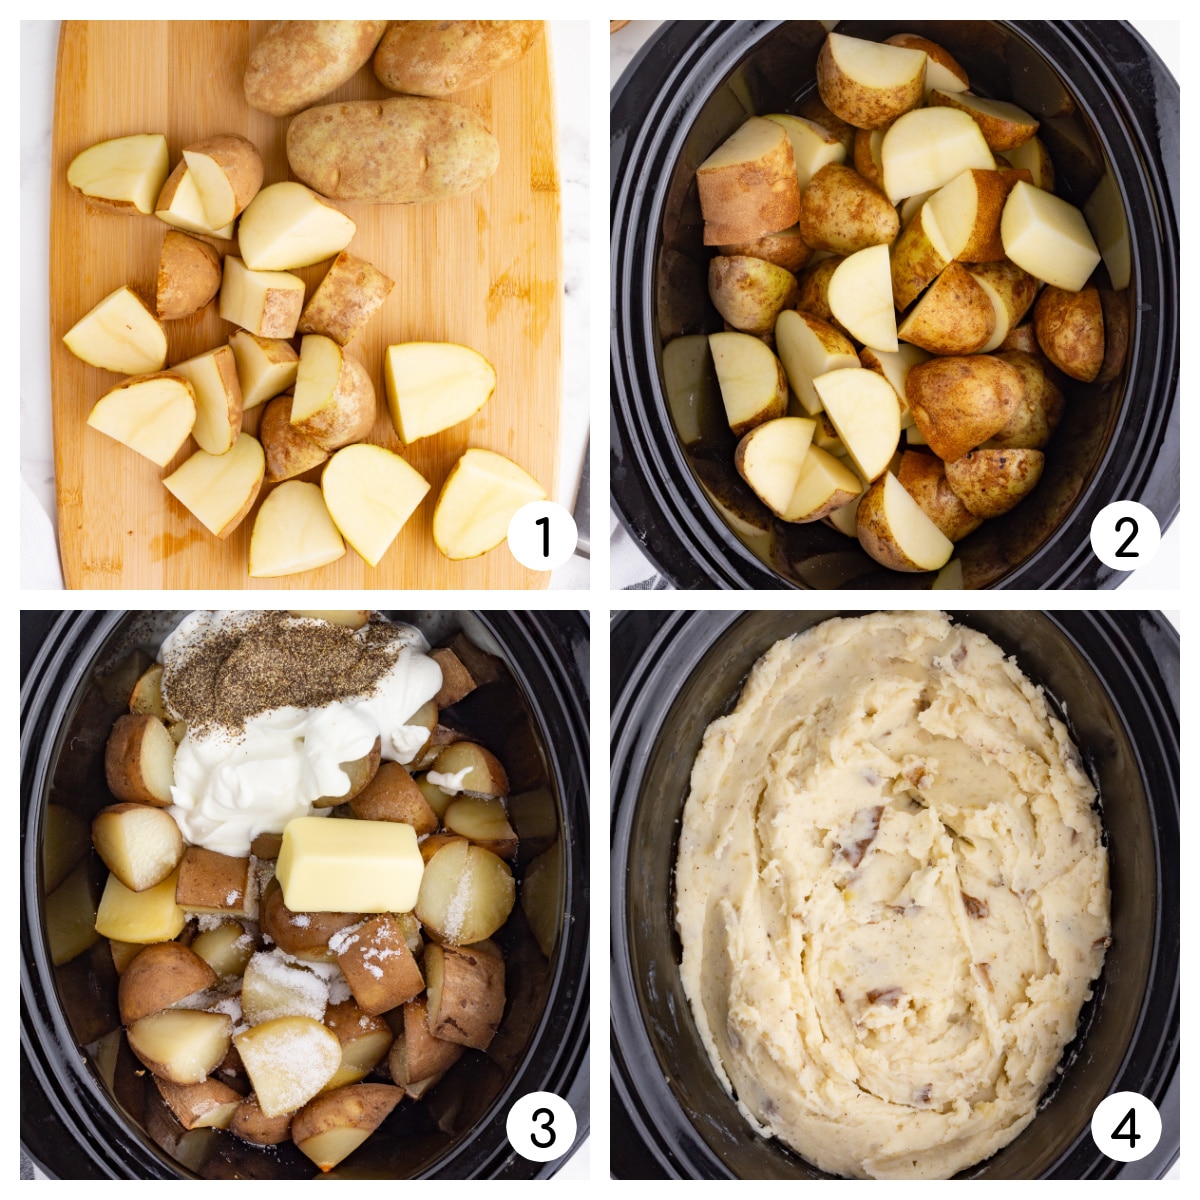 process photos of making crockpot mashed potatoes, chopped potatoes, potatoes in crockpot with ingredients, mashed potatoes in crockpot